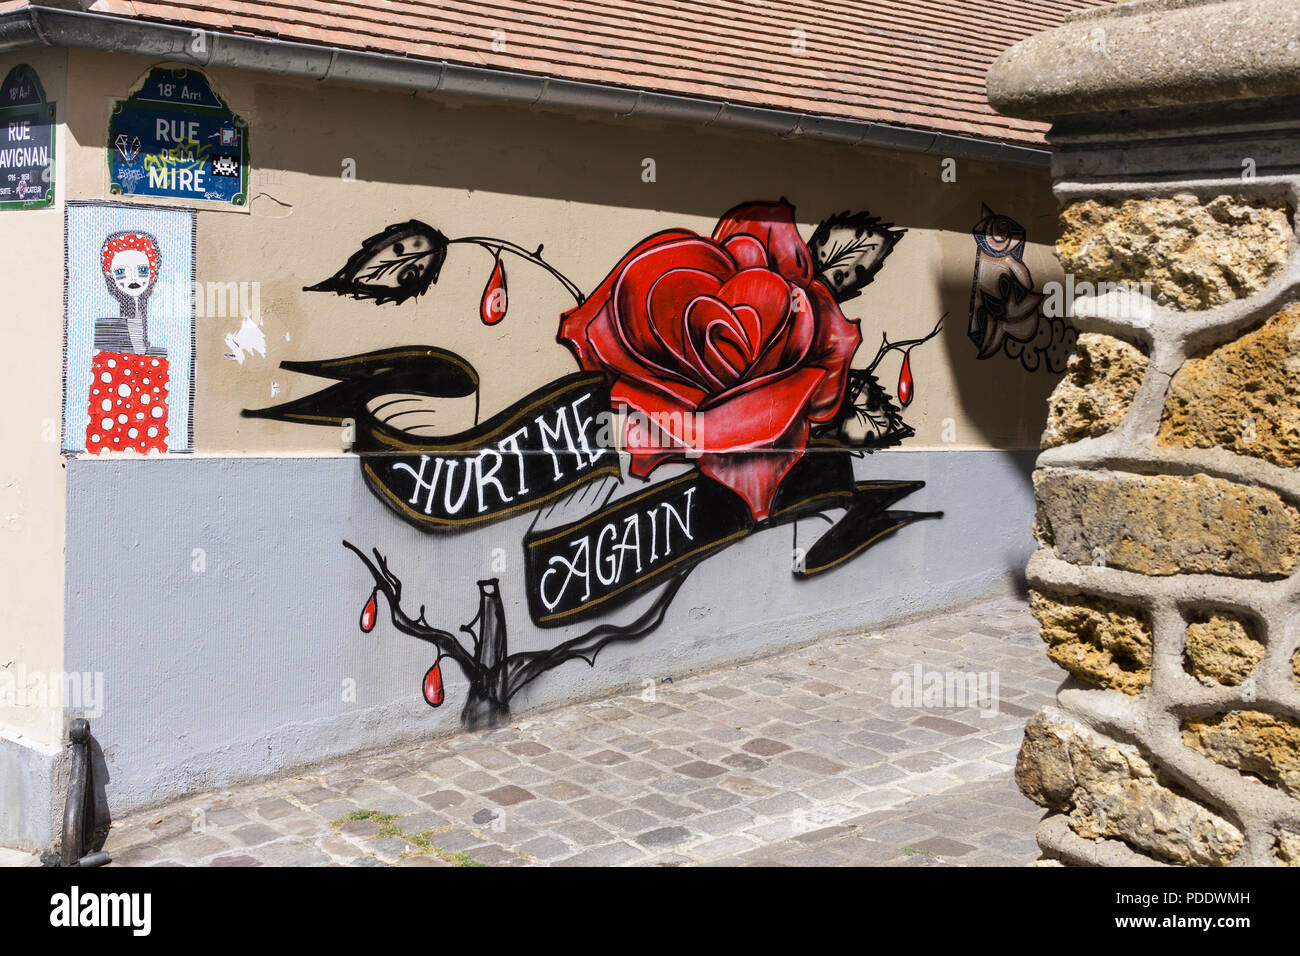 Montmartre street art Paris - Graffiti of a rose thorn hurt in Montmartre in Paris, France, Europe. Stock Photo